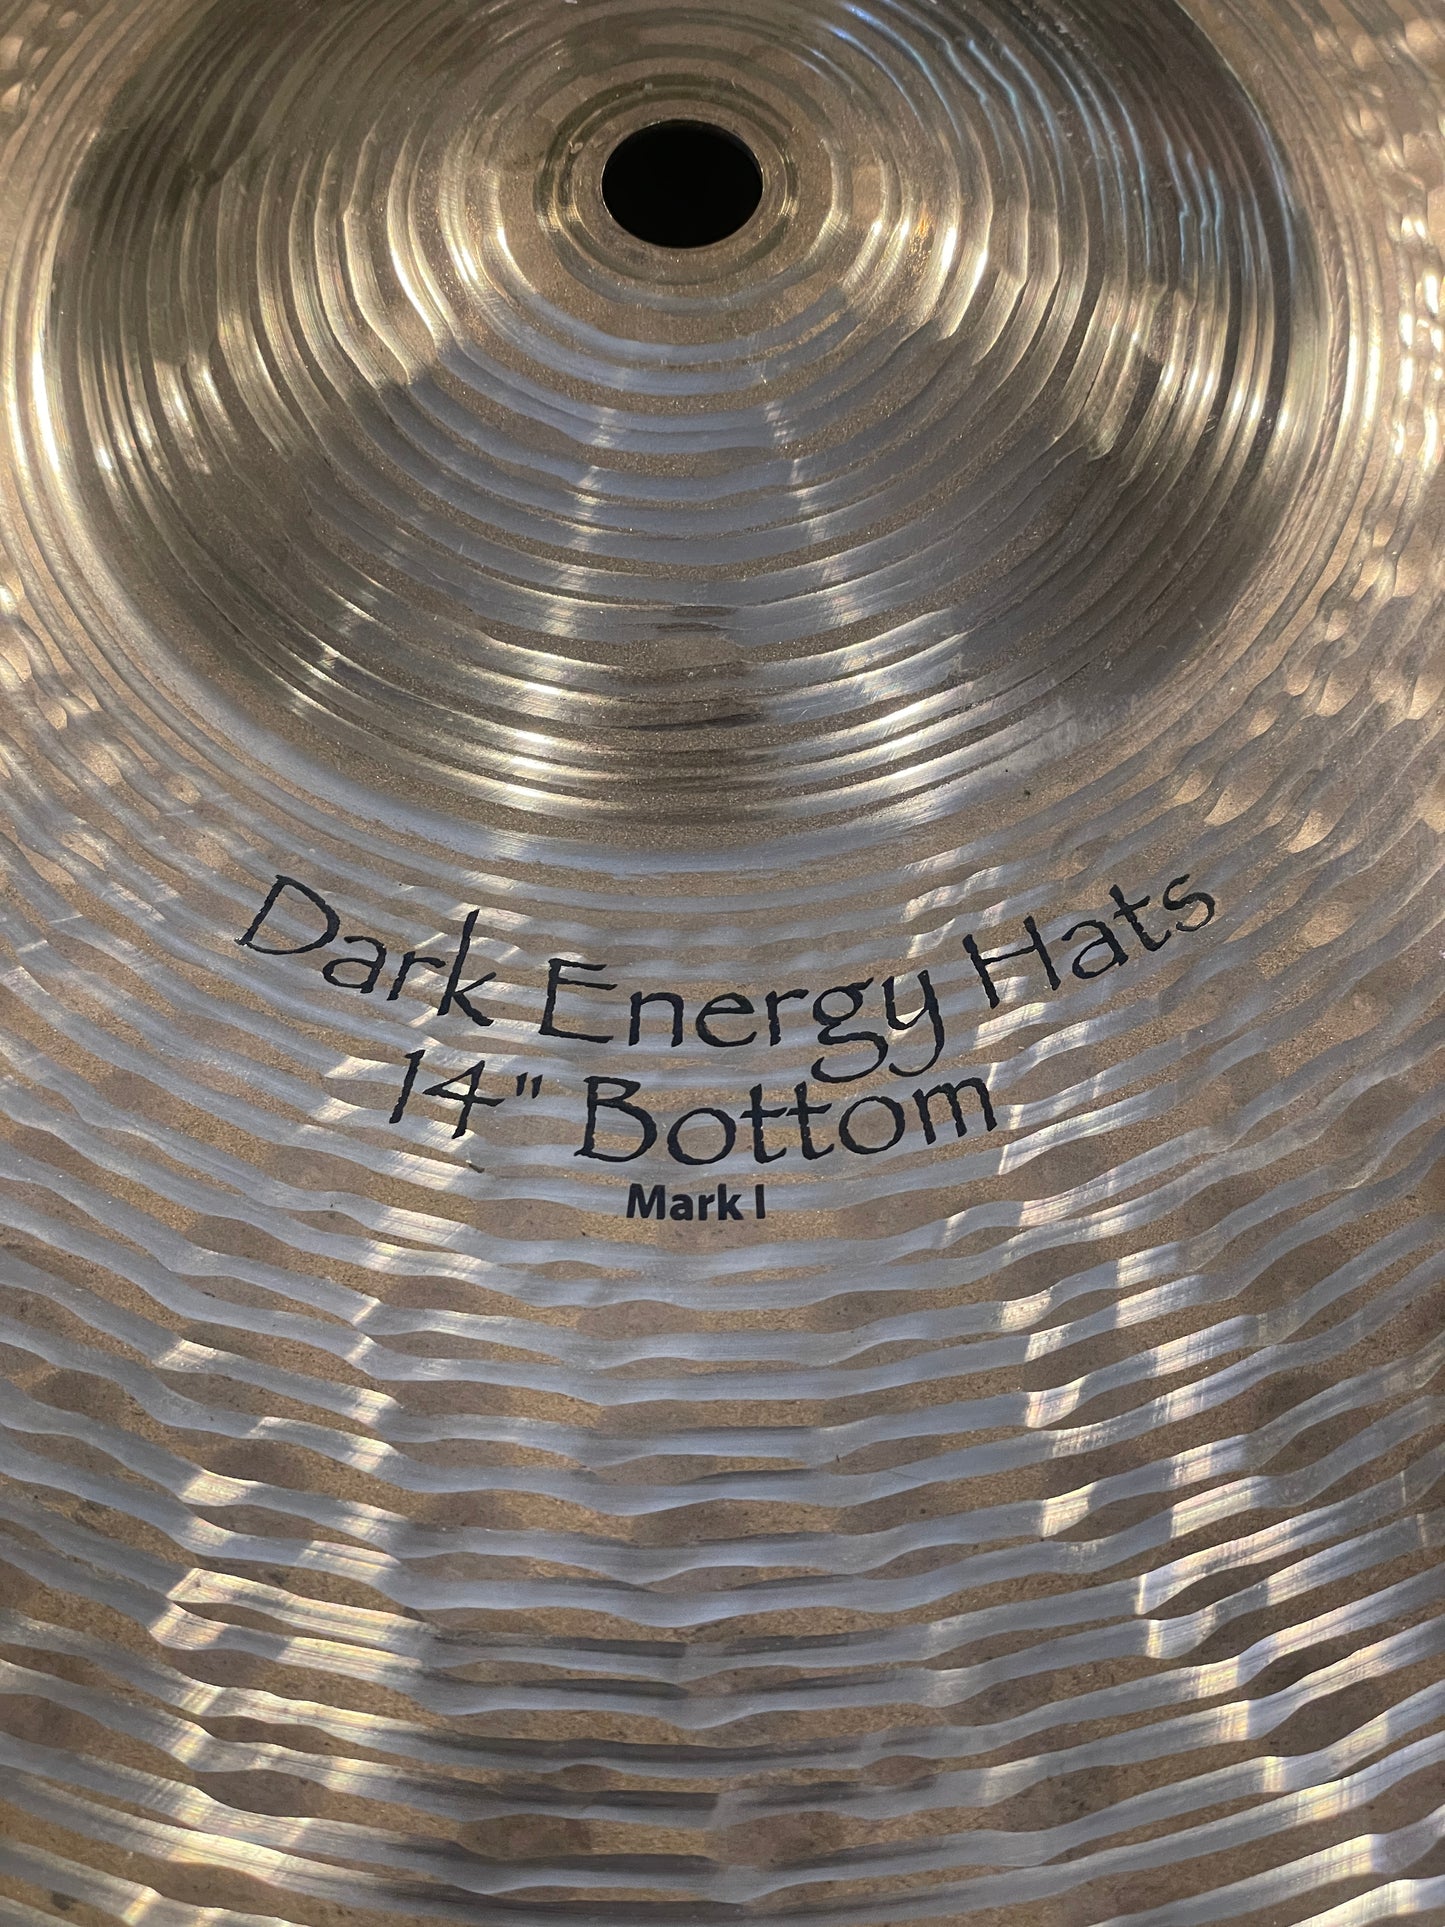 14" Paiste Signature Dark Energy Mark I Hi-Hat Cymbal Pair 956g/1408g